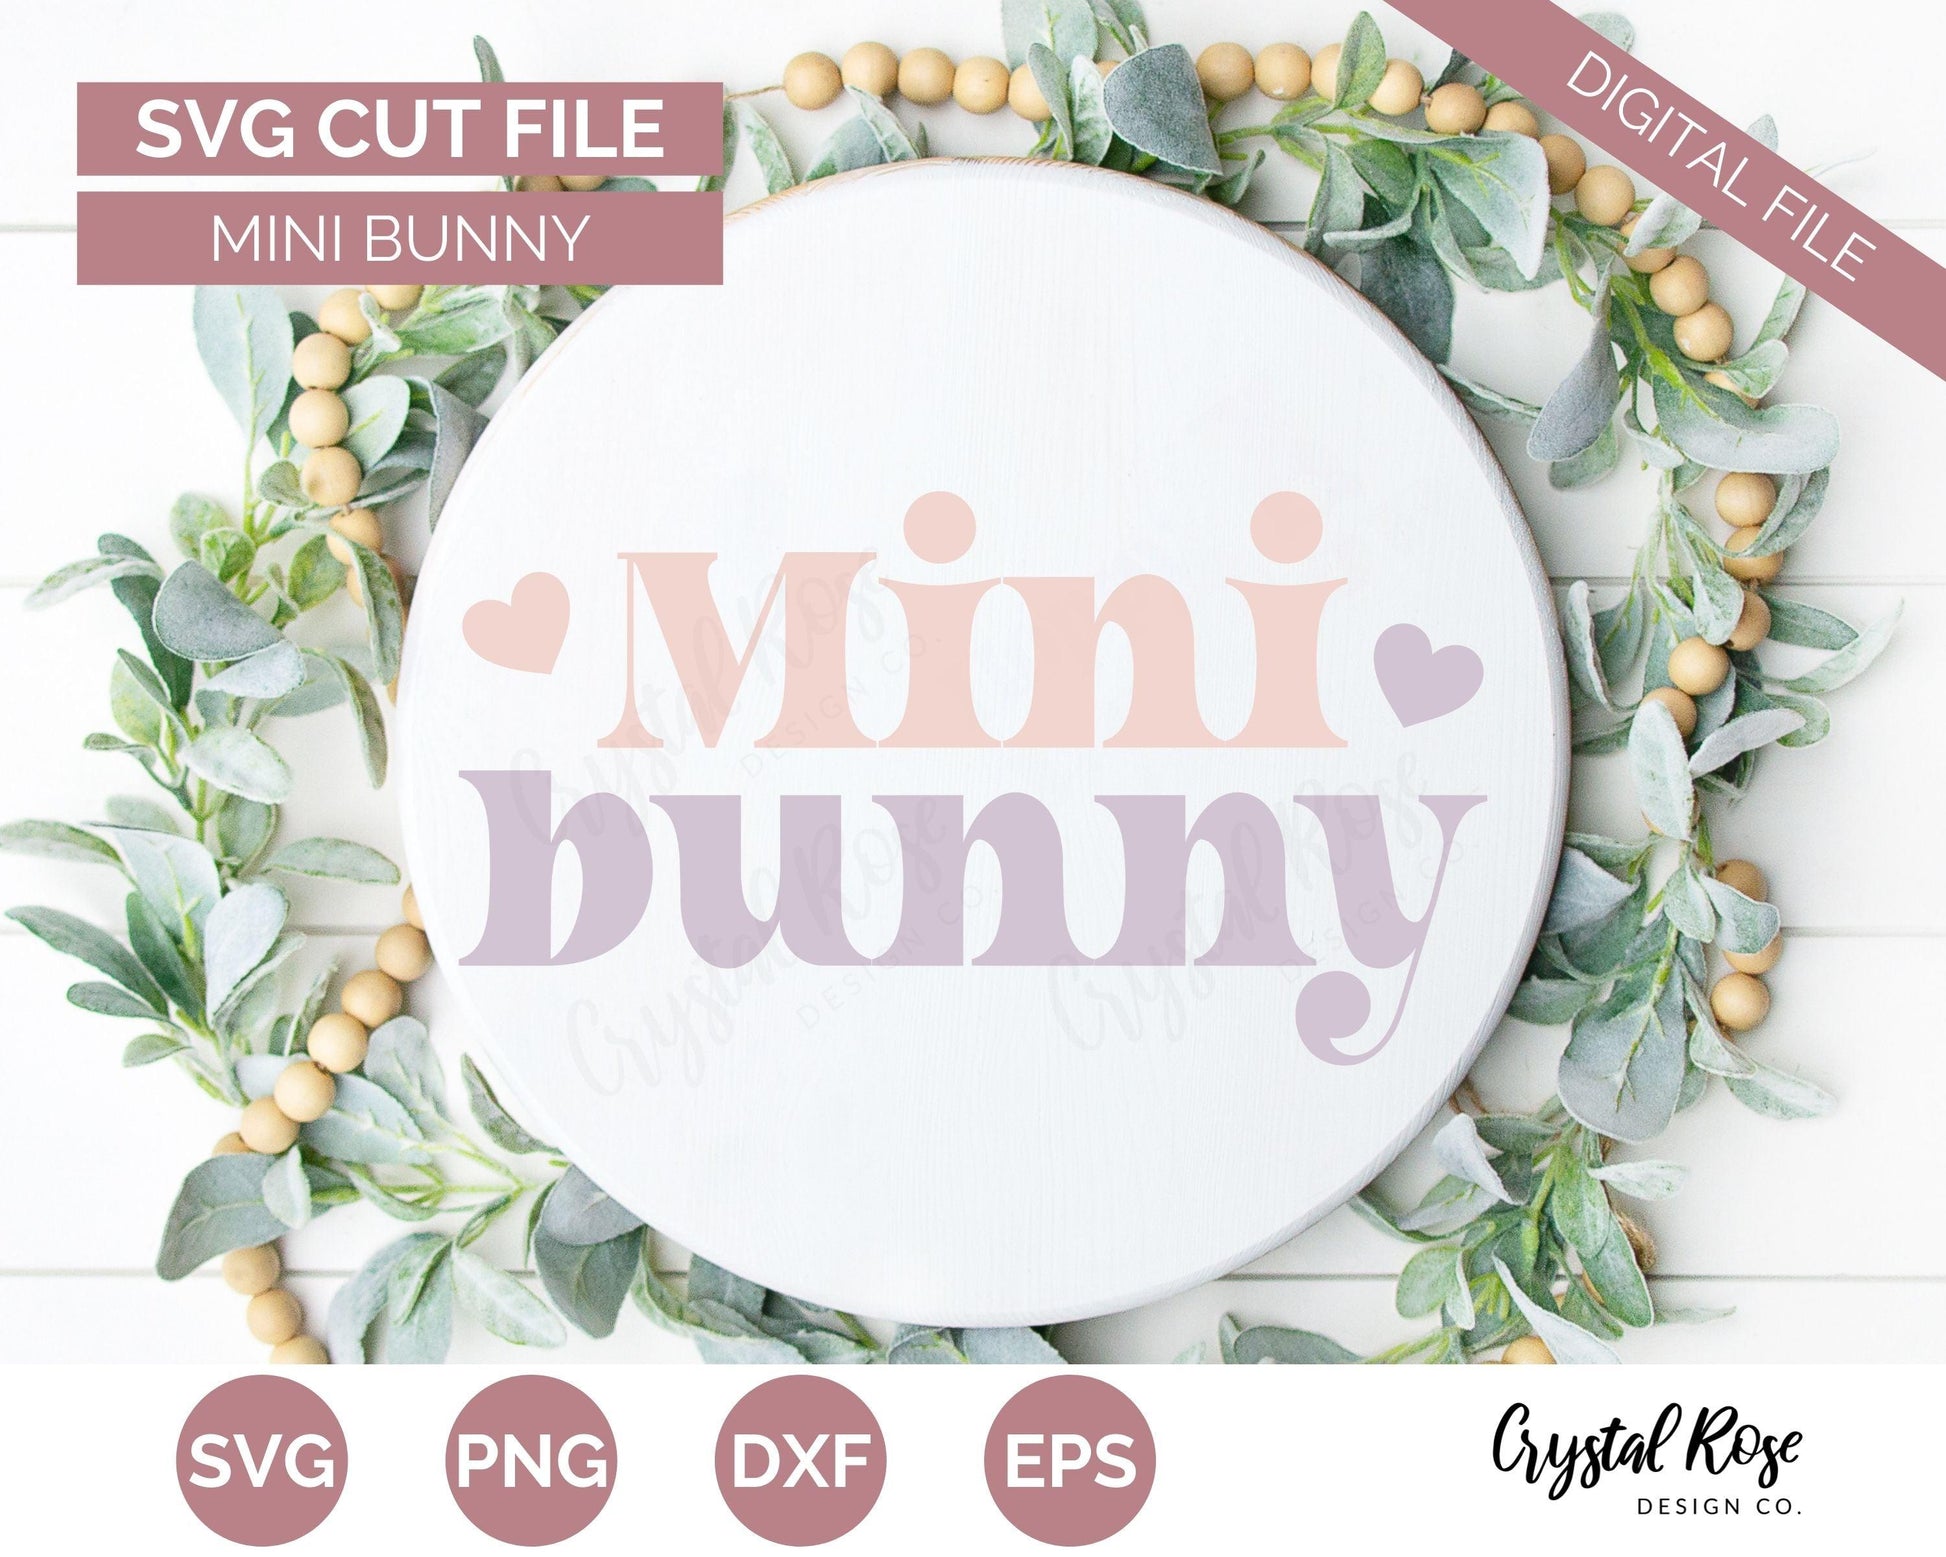 Mini Bunny SVG, Easter SVG, Digital Download, Cricut, Silhouette, Glowforge (includes svg/png/dxf/eps) - Crystal Rose Design Co.